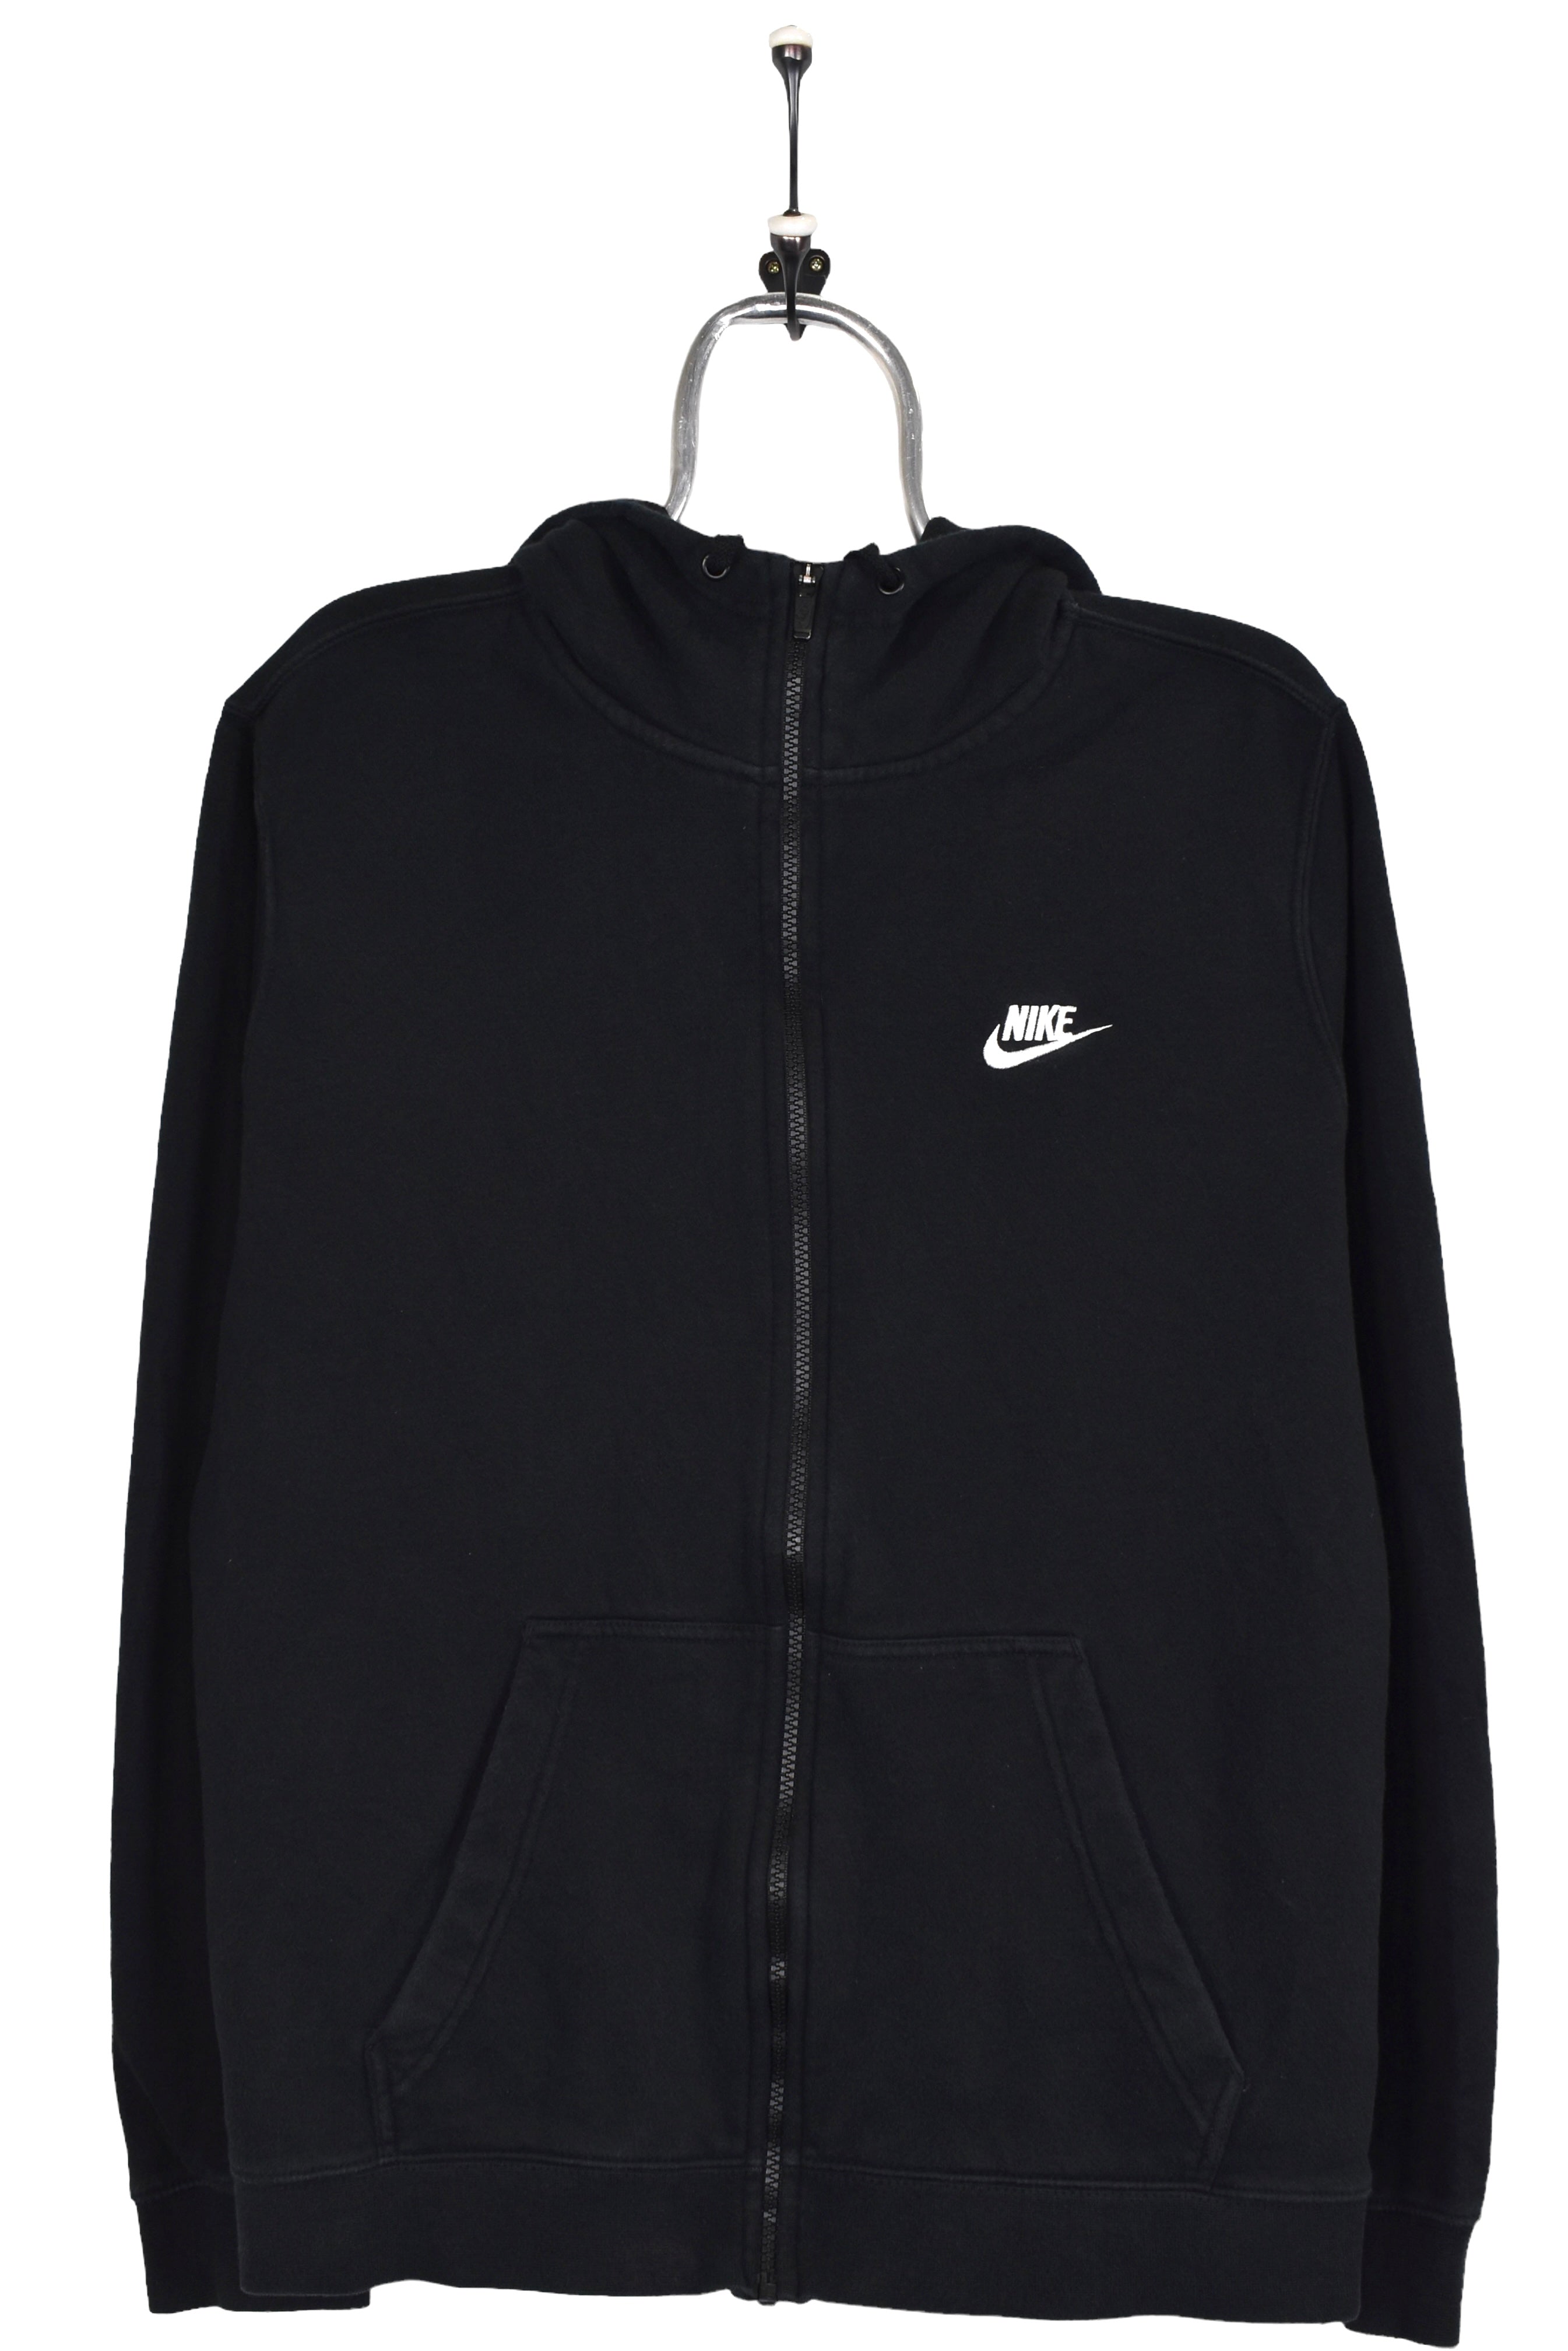 Vintage Nike hoodie, black embroidered sweatshirt - Large